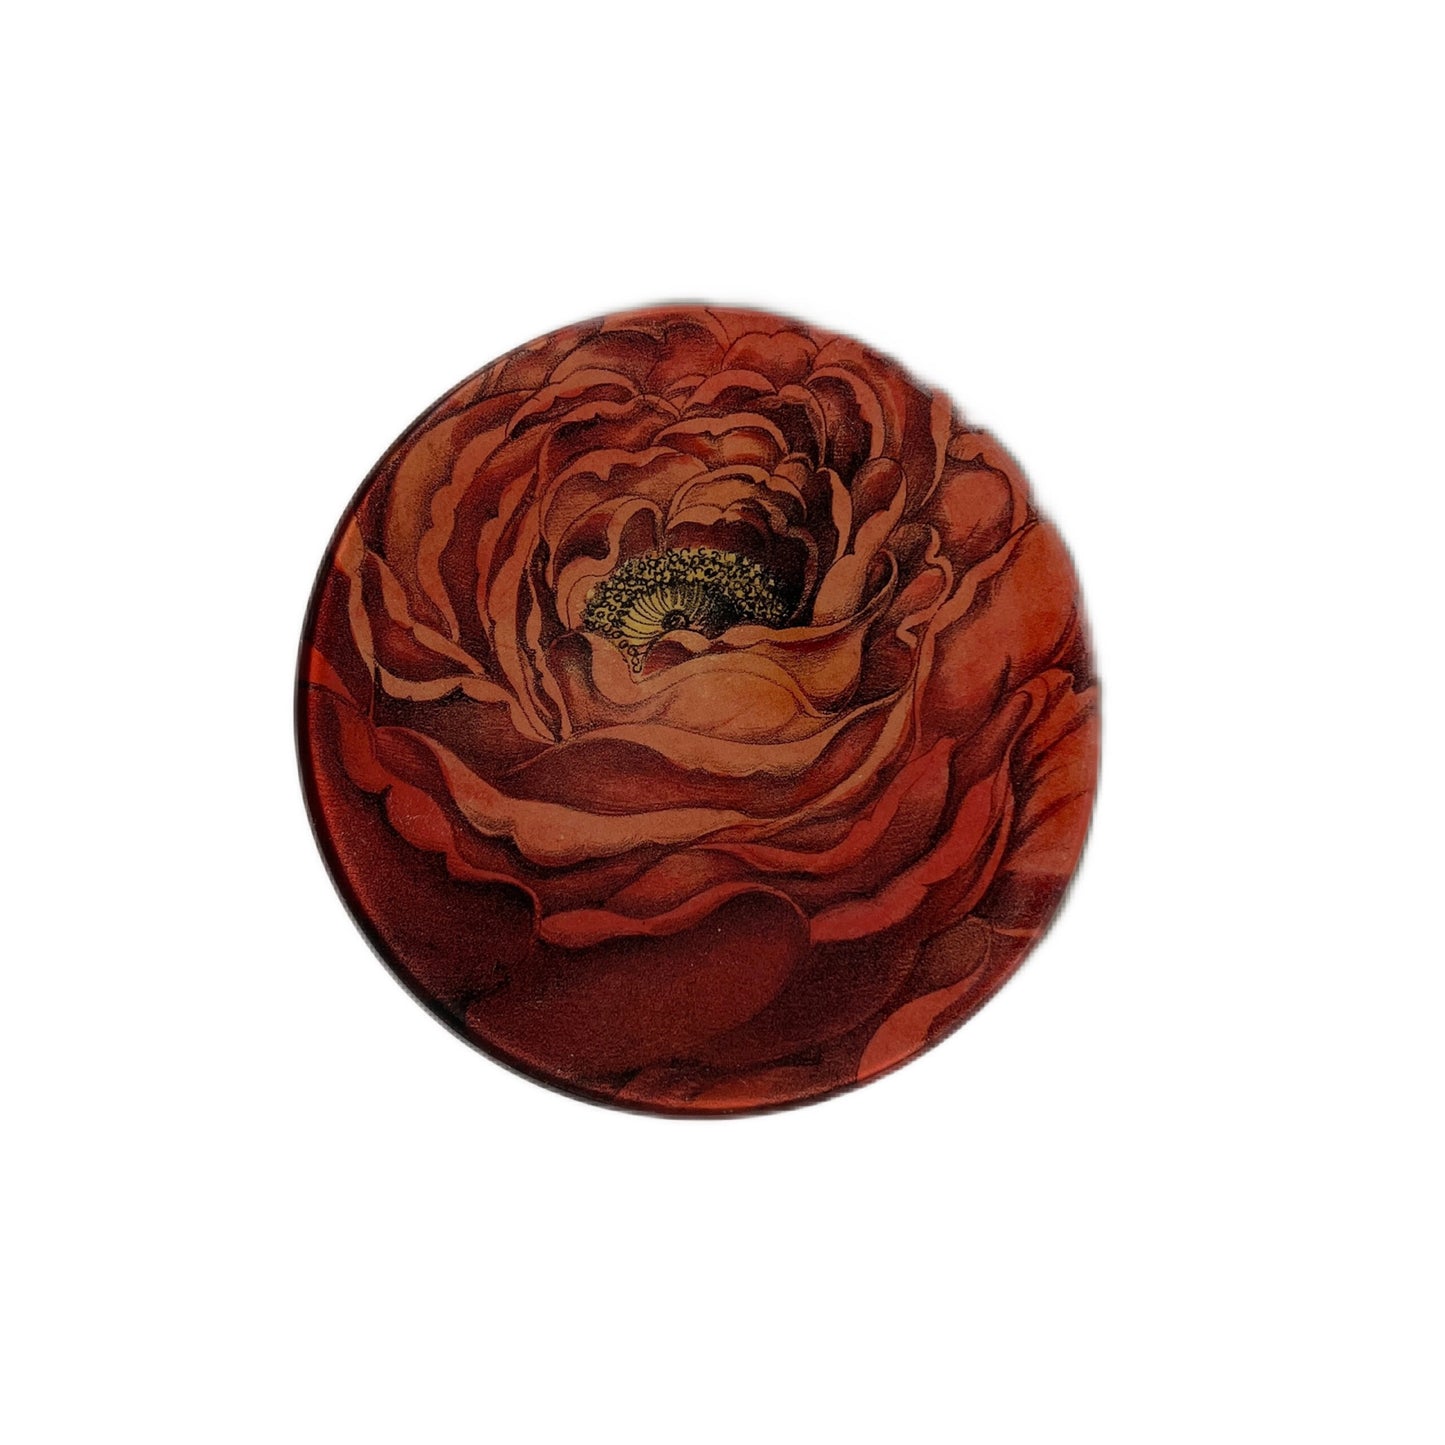 【JOHN DERIAN】デコパージュプレート The Rose (Red)